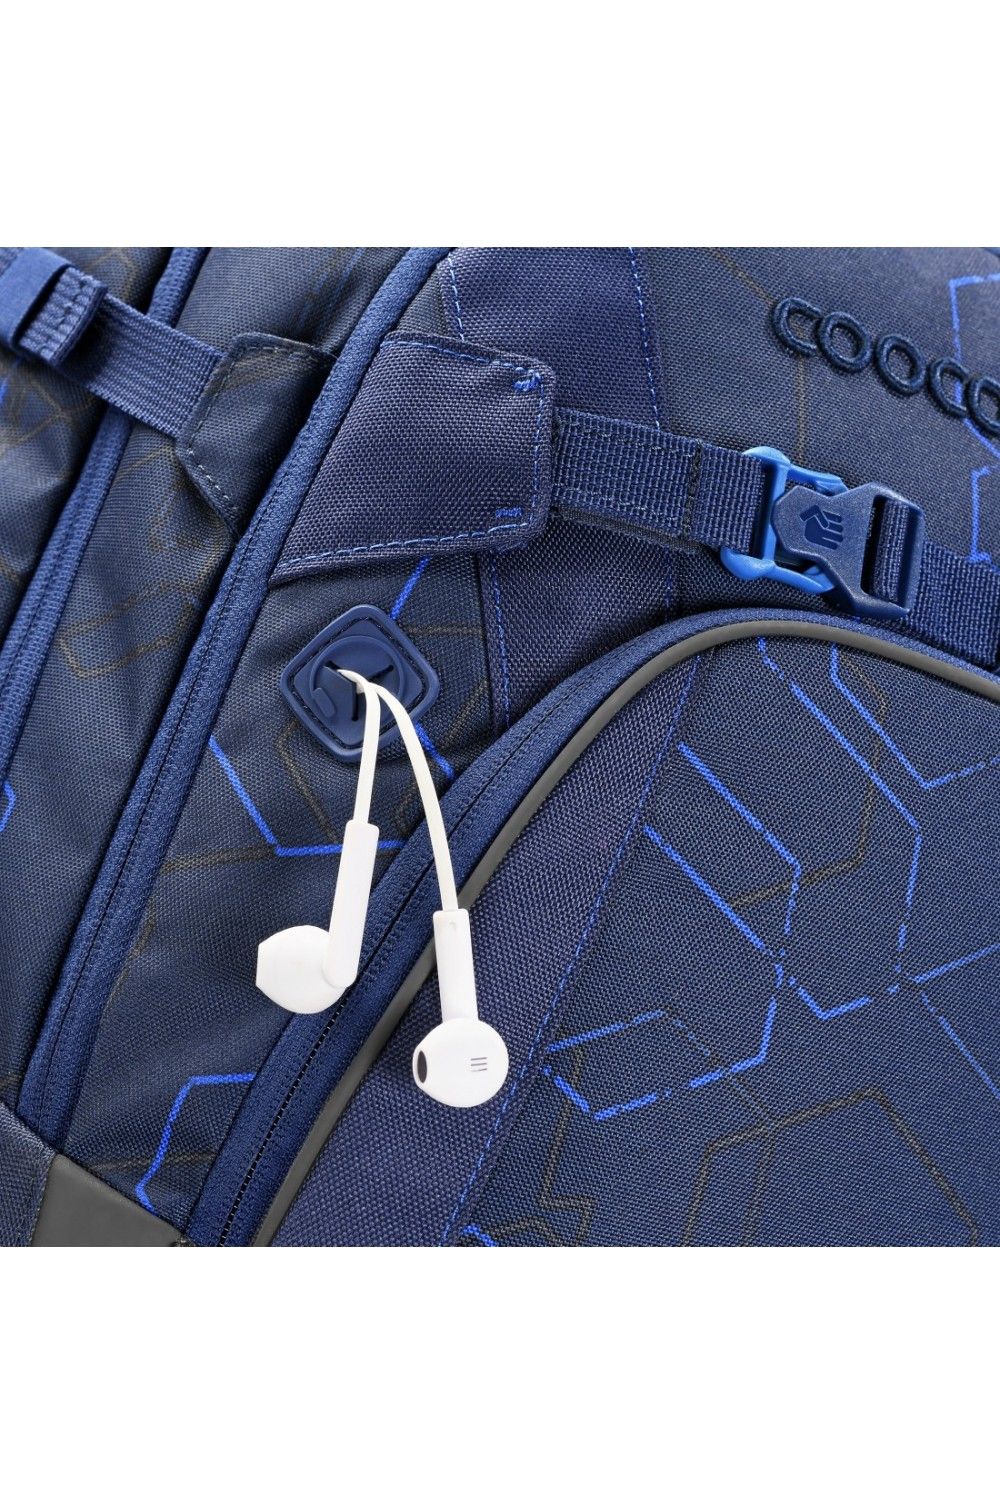 School backpack Coocazoo MATE Blue Motion